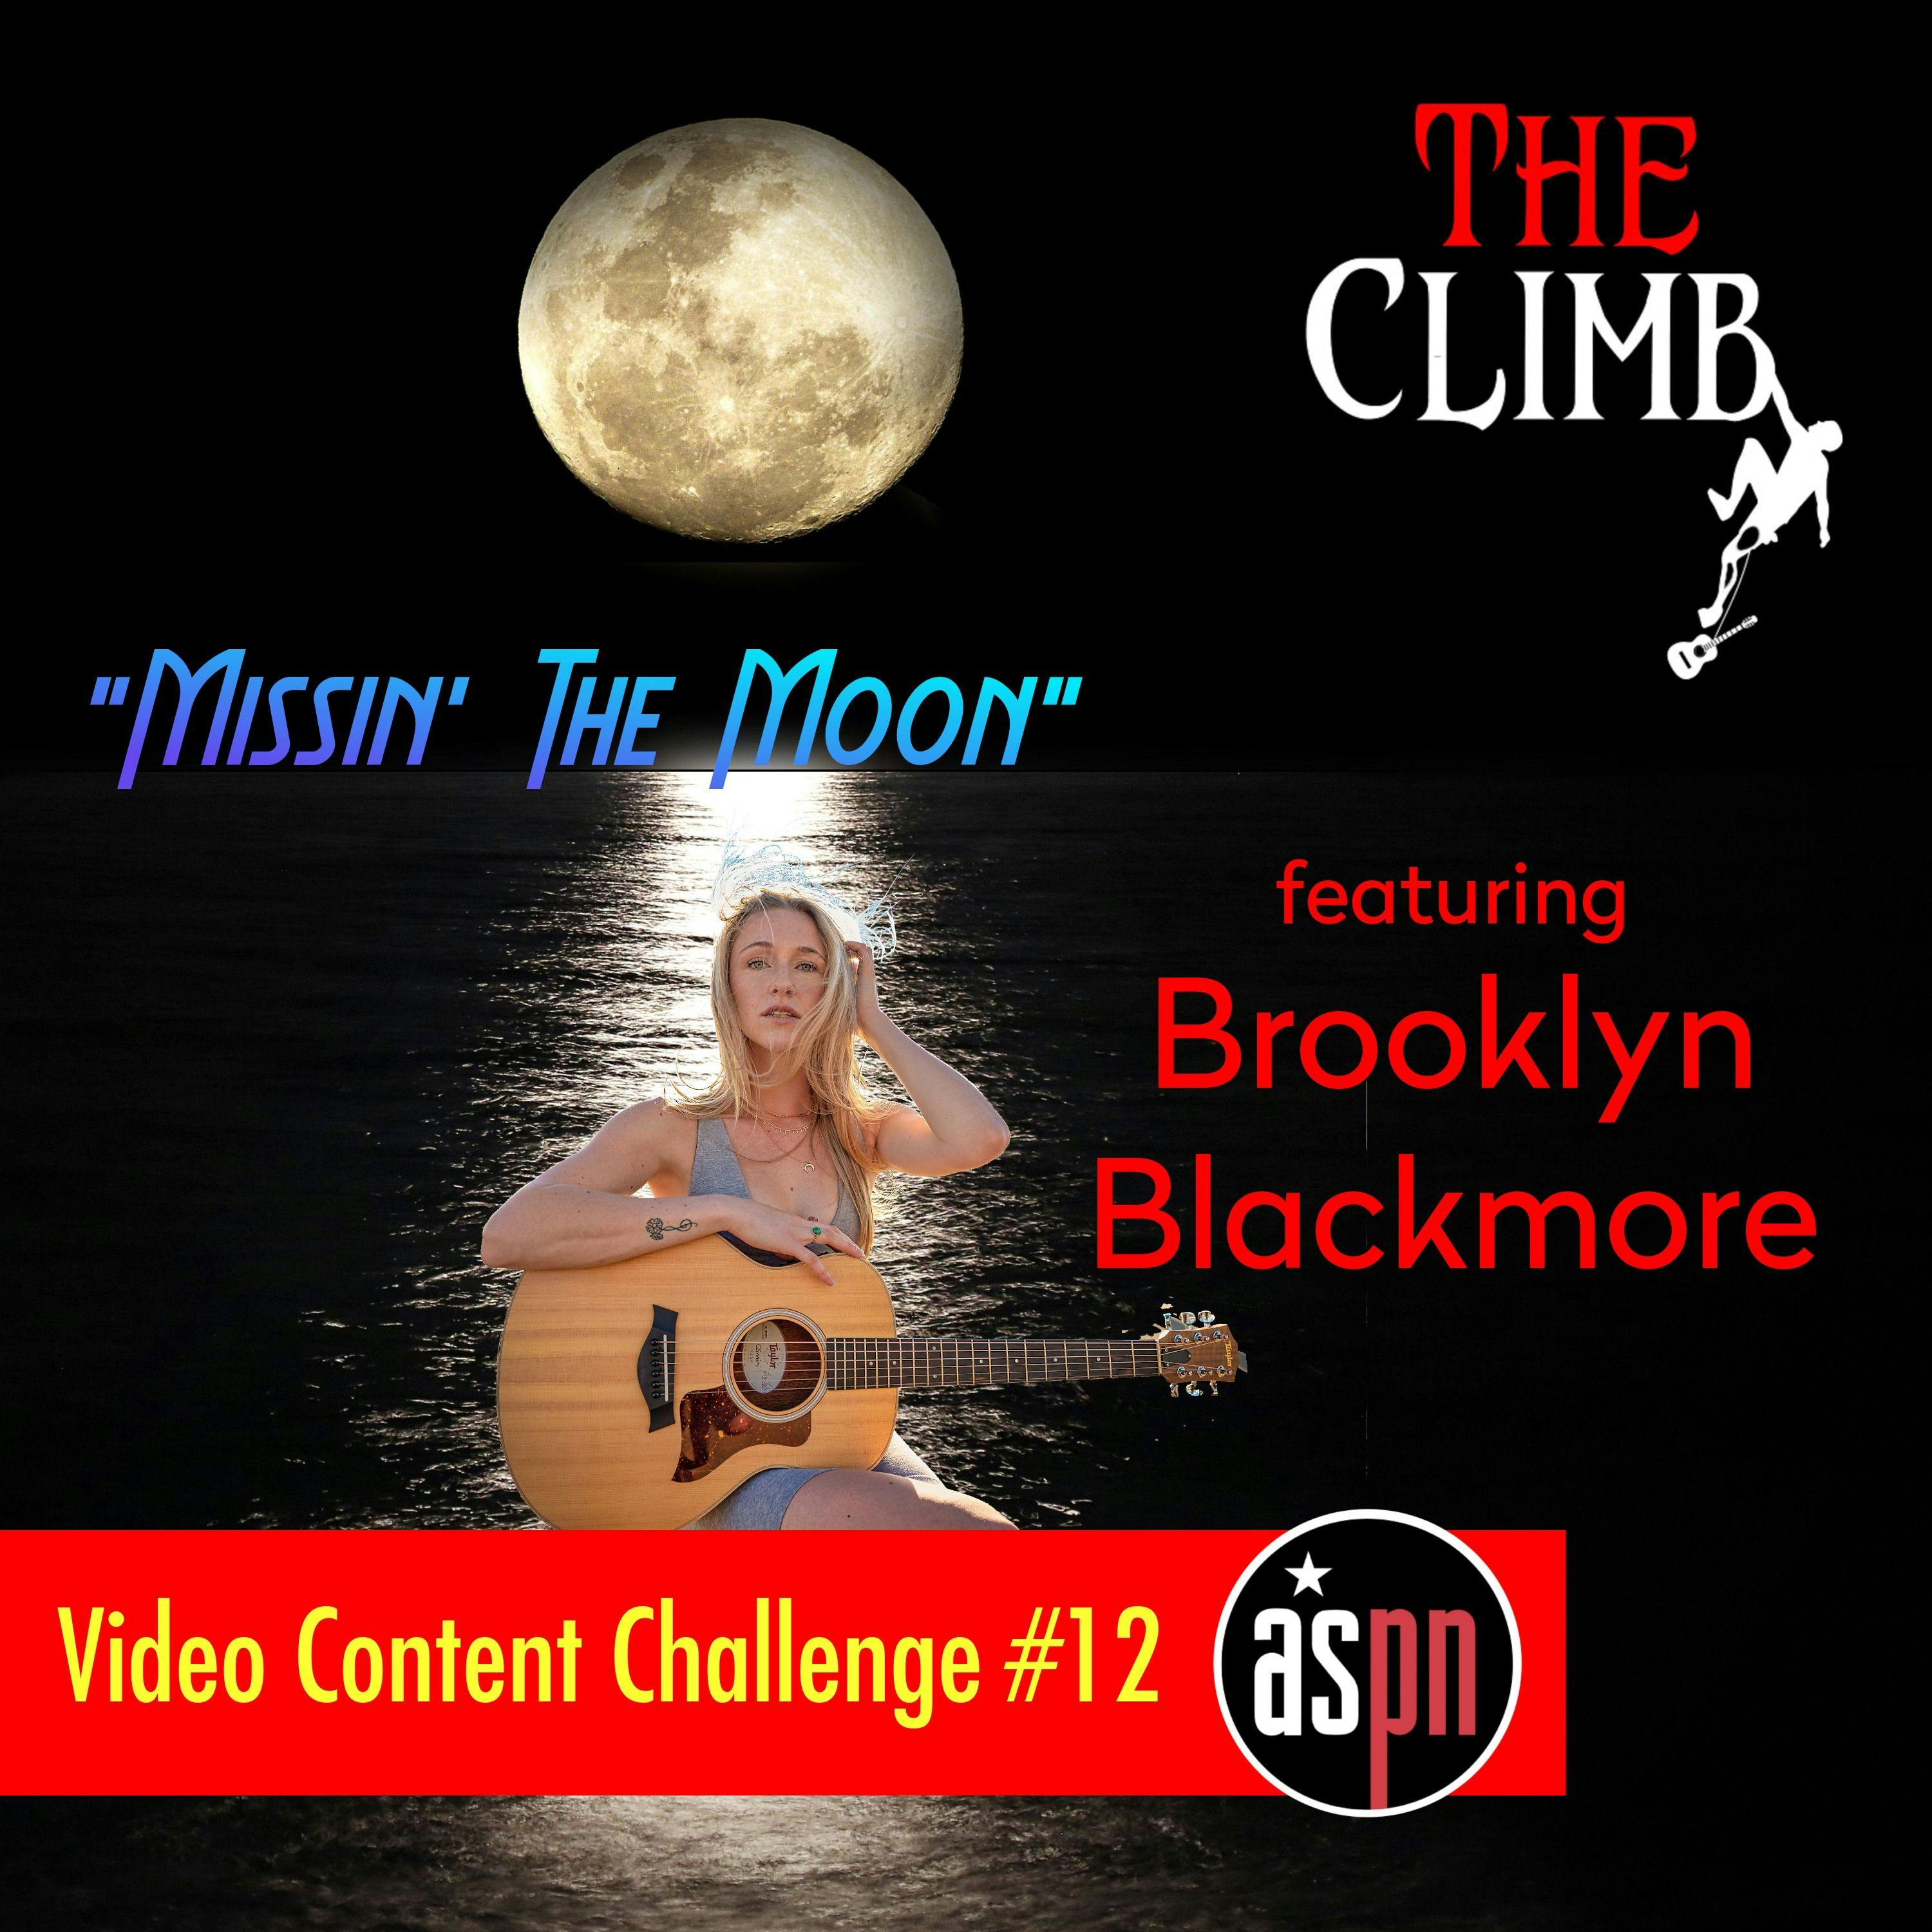 Video Content Challenge #12: 